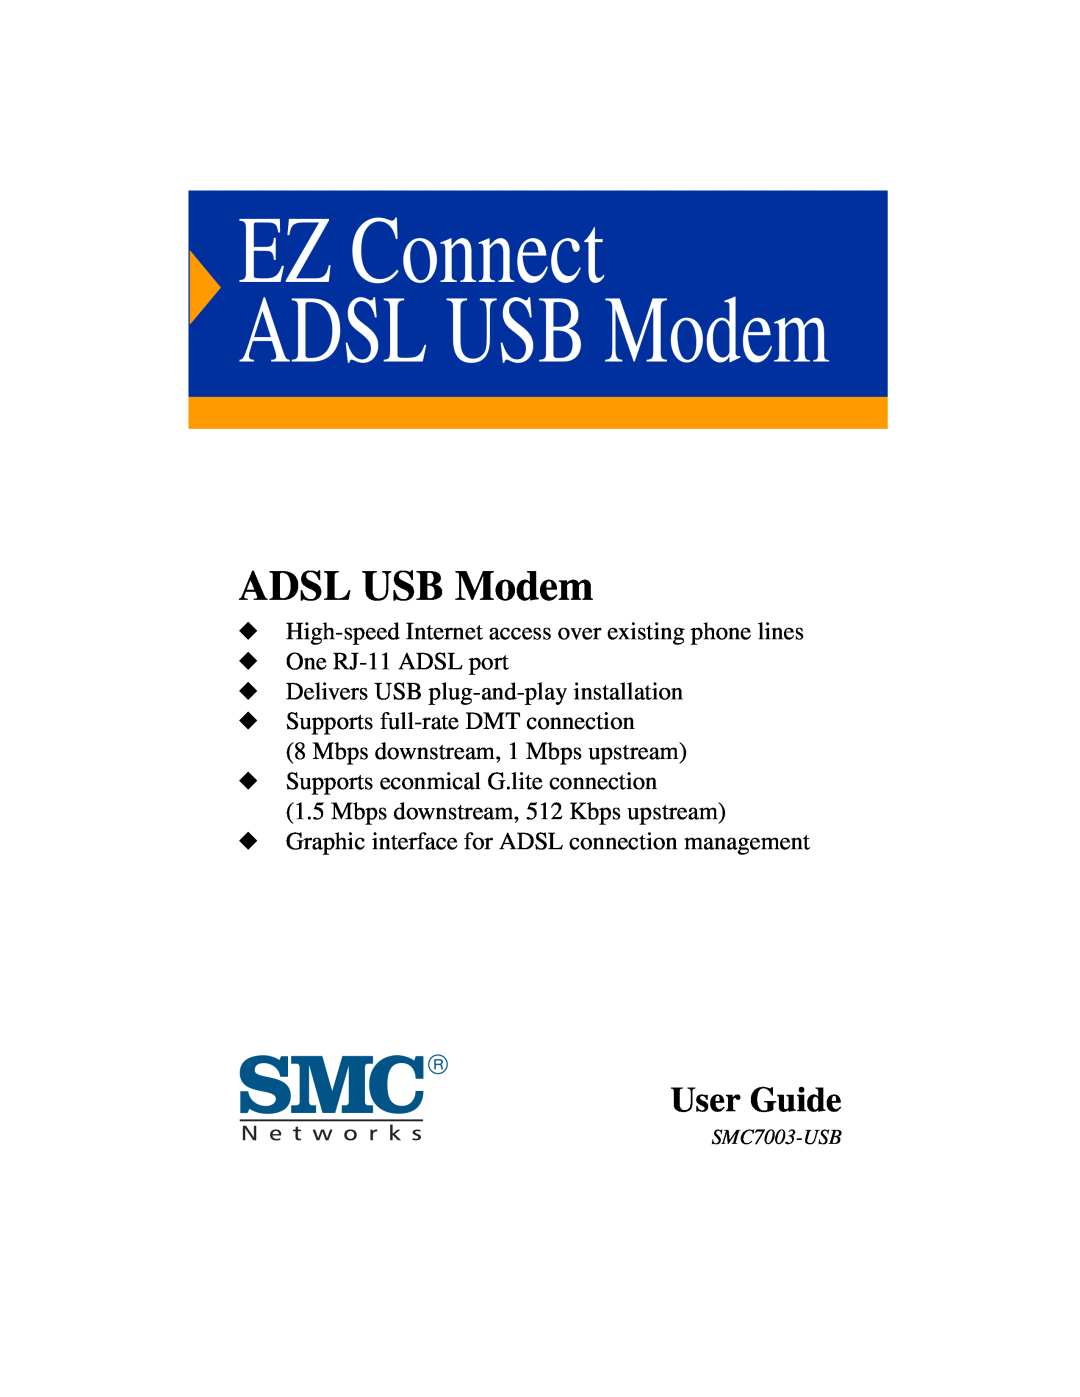 SMC Networks SMC7003-USB manual EZ Connect ADSL USB Modem, User Guide, Supports econmical G.lite connection 